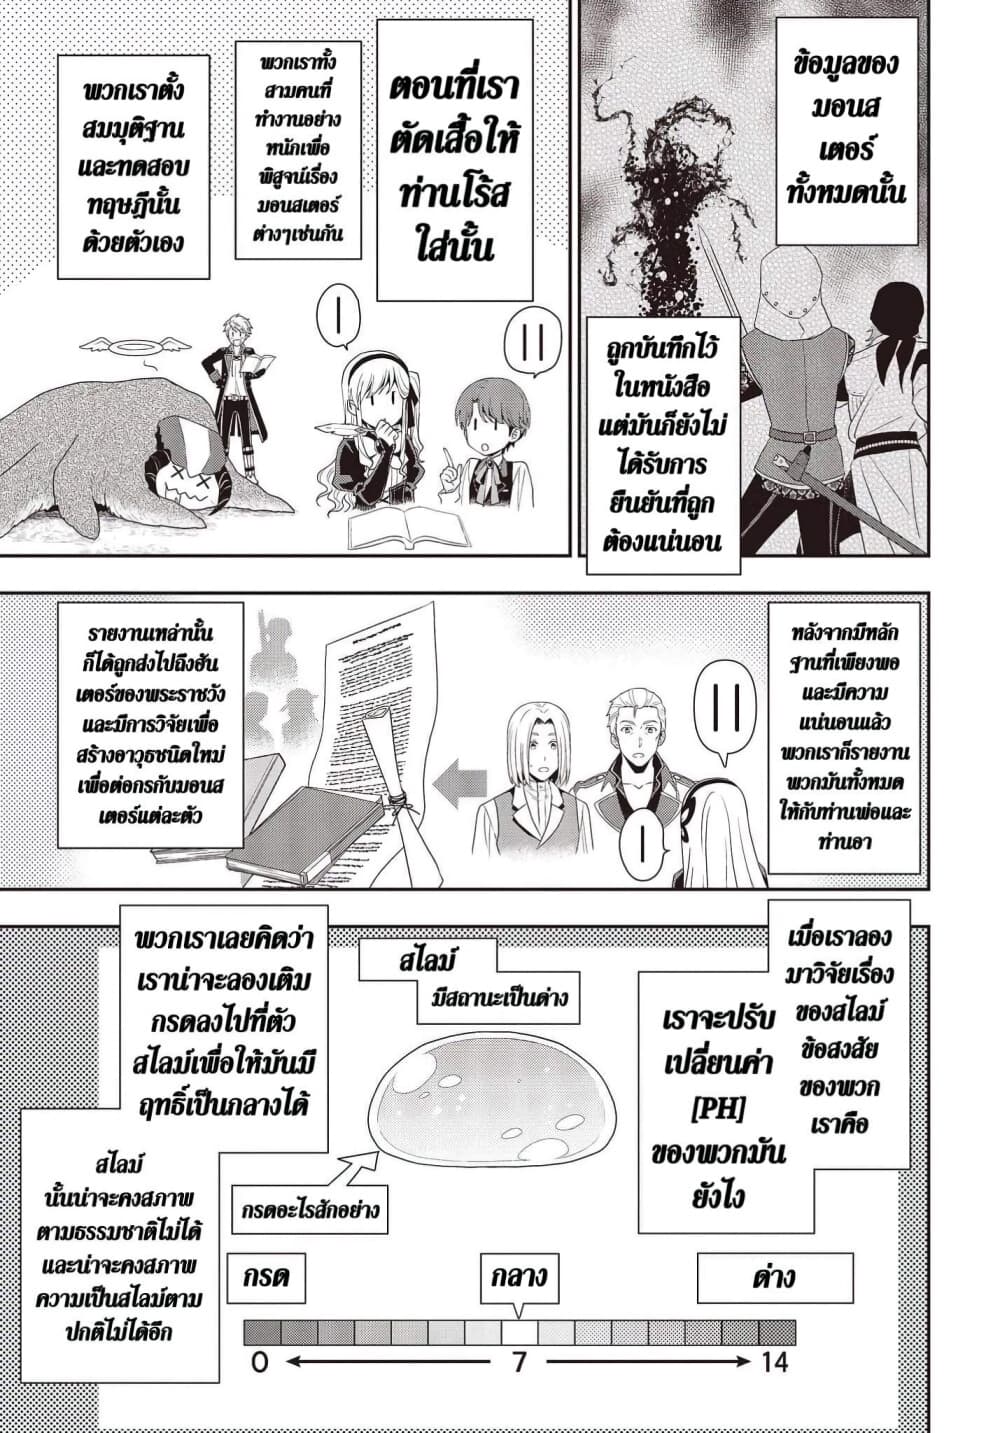 Tanaka Family Reincarnates 12 (9)